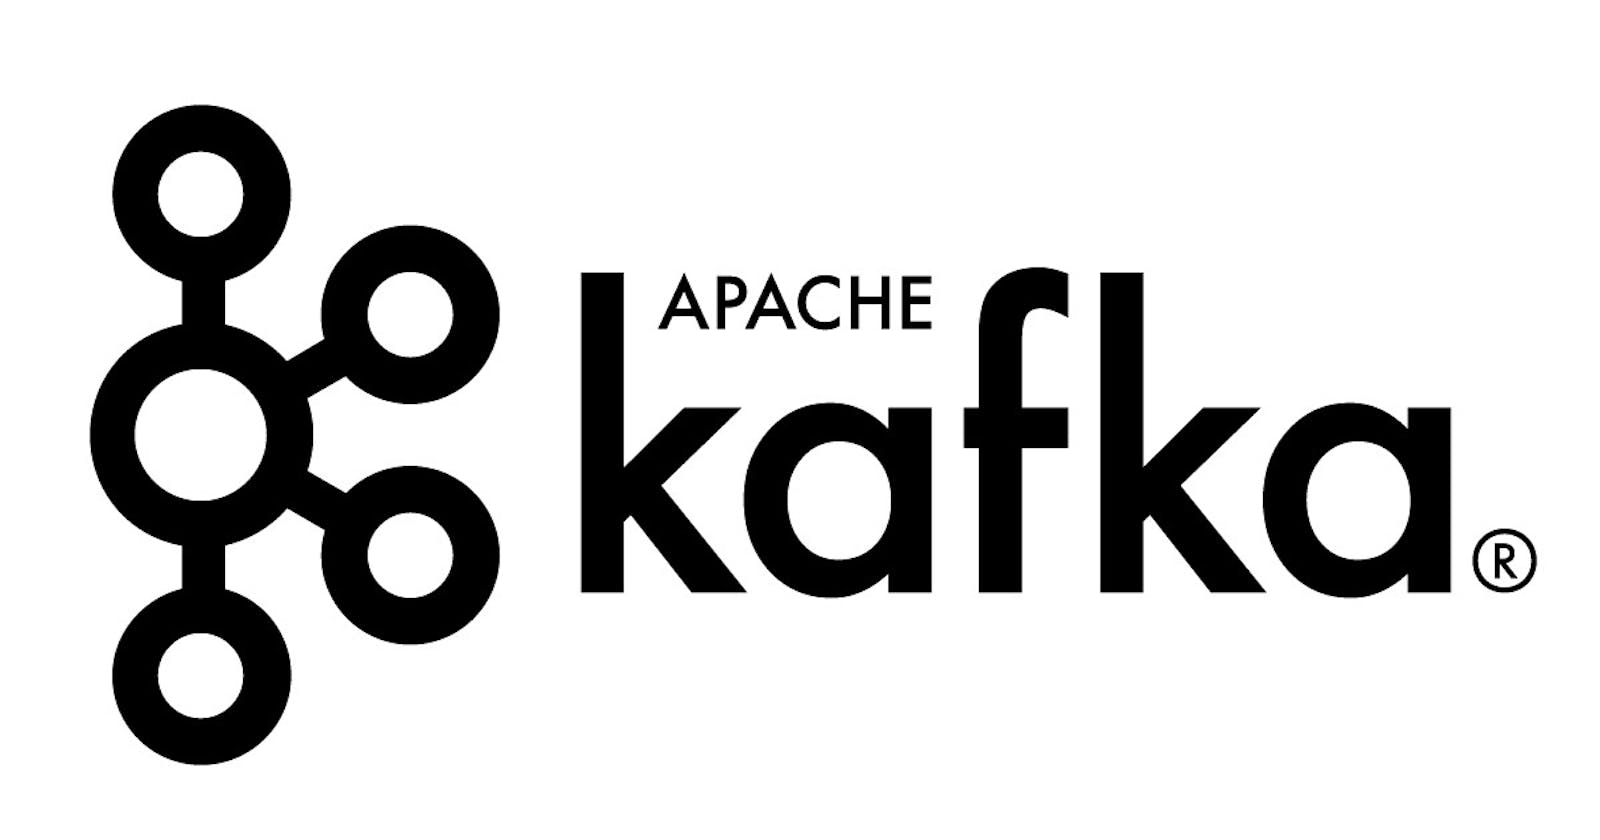 What is Apache Kafka?